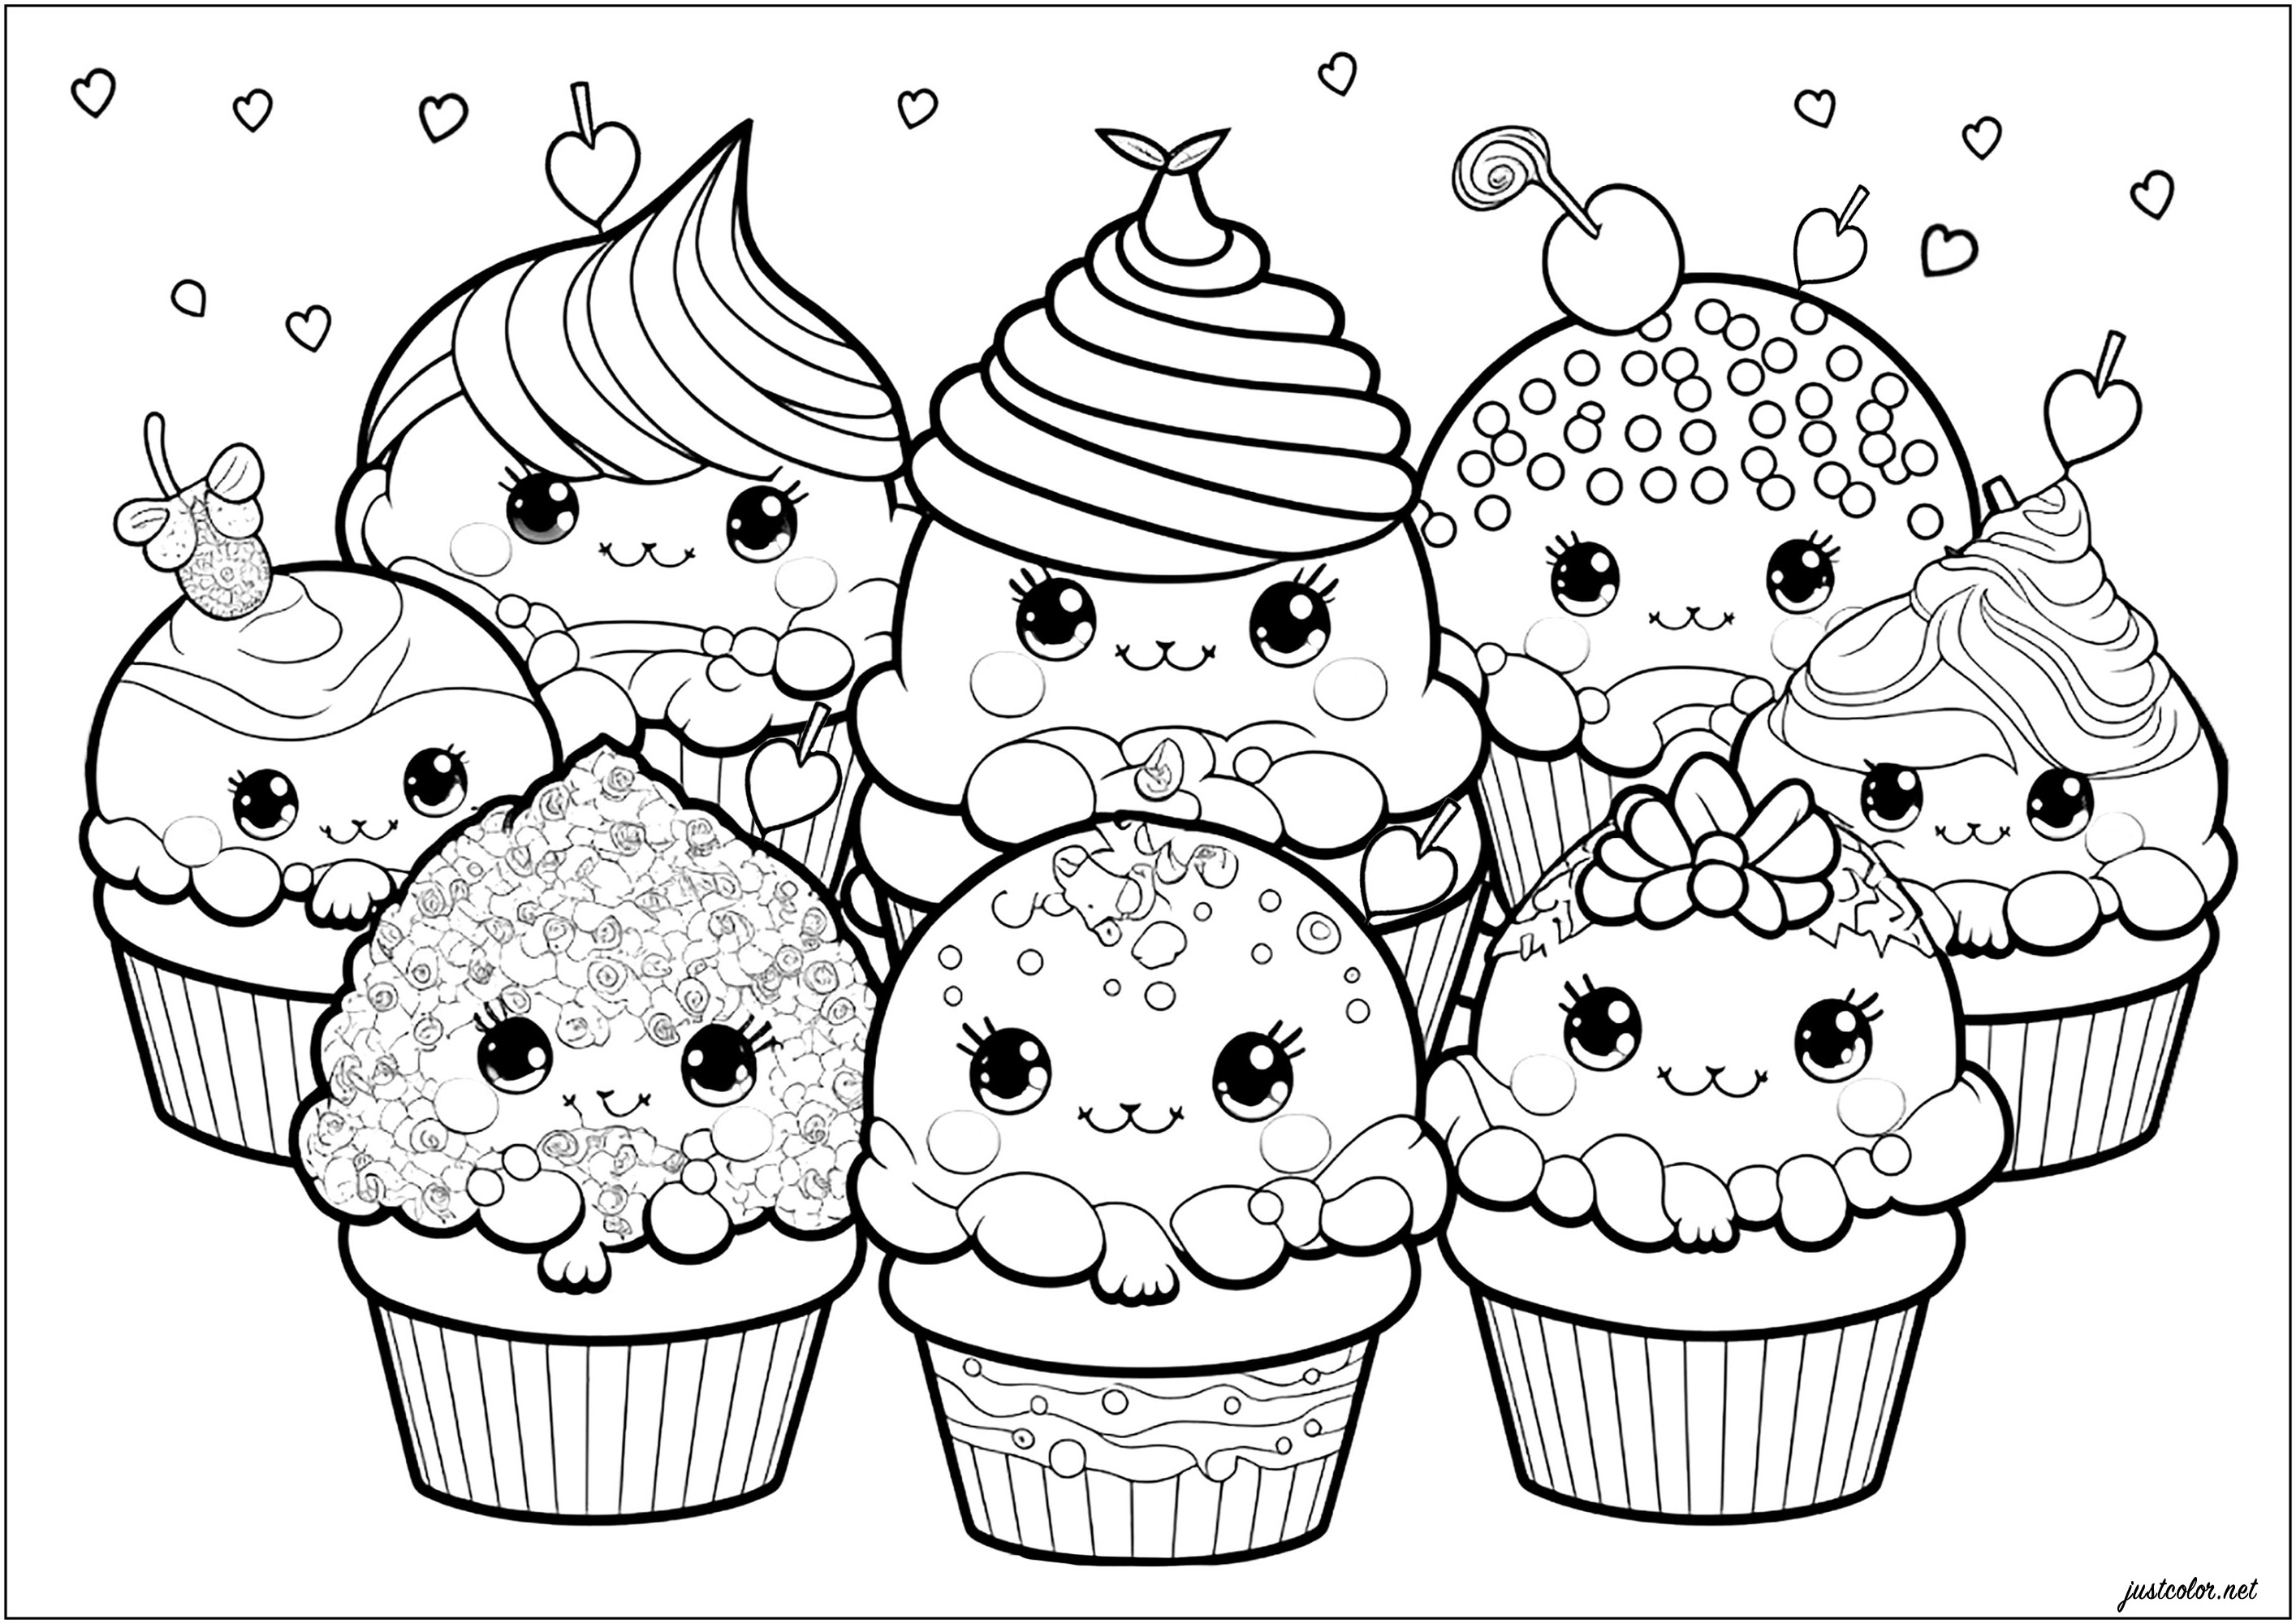 Cupcakes inspired by Kawaii characters